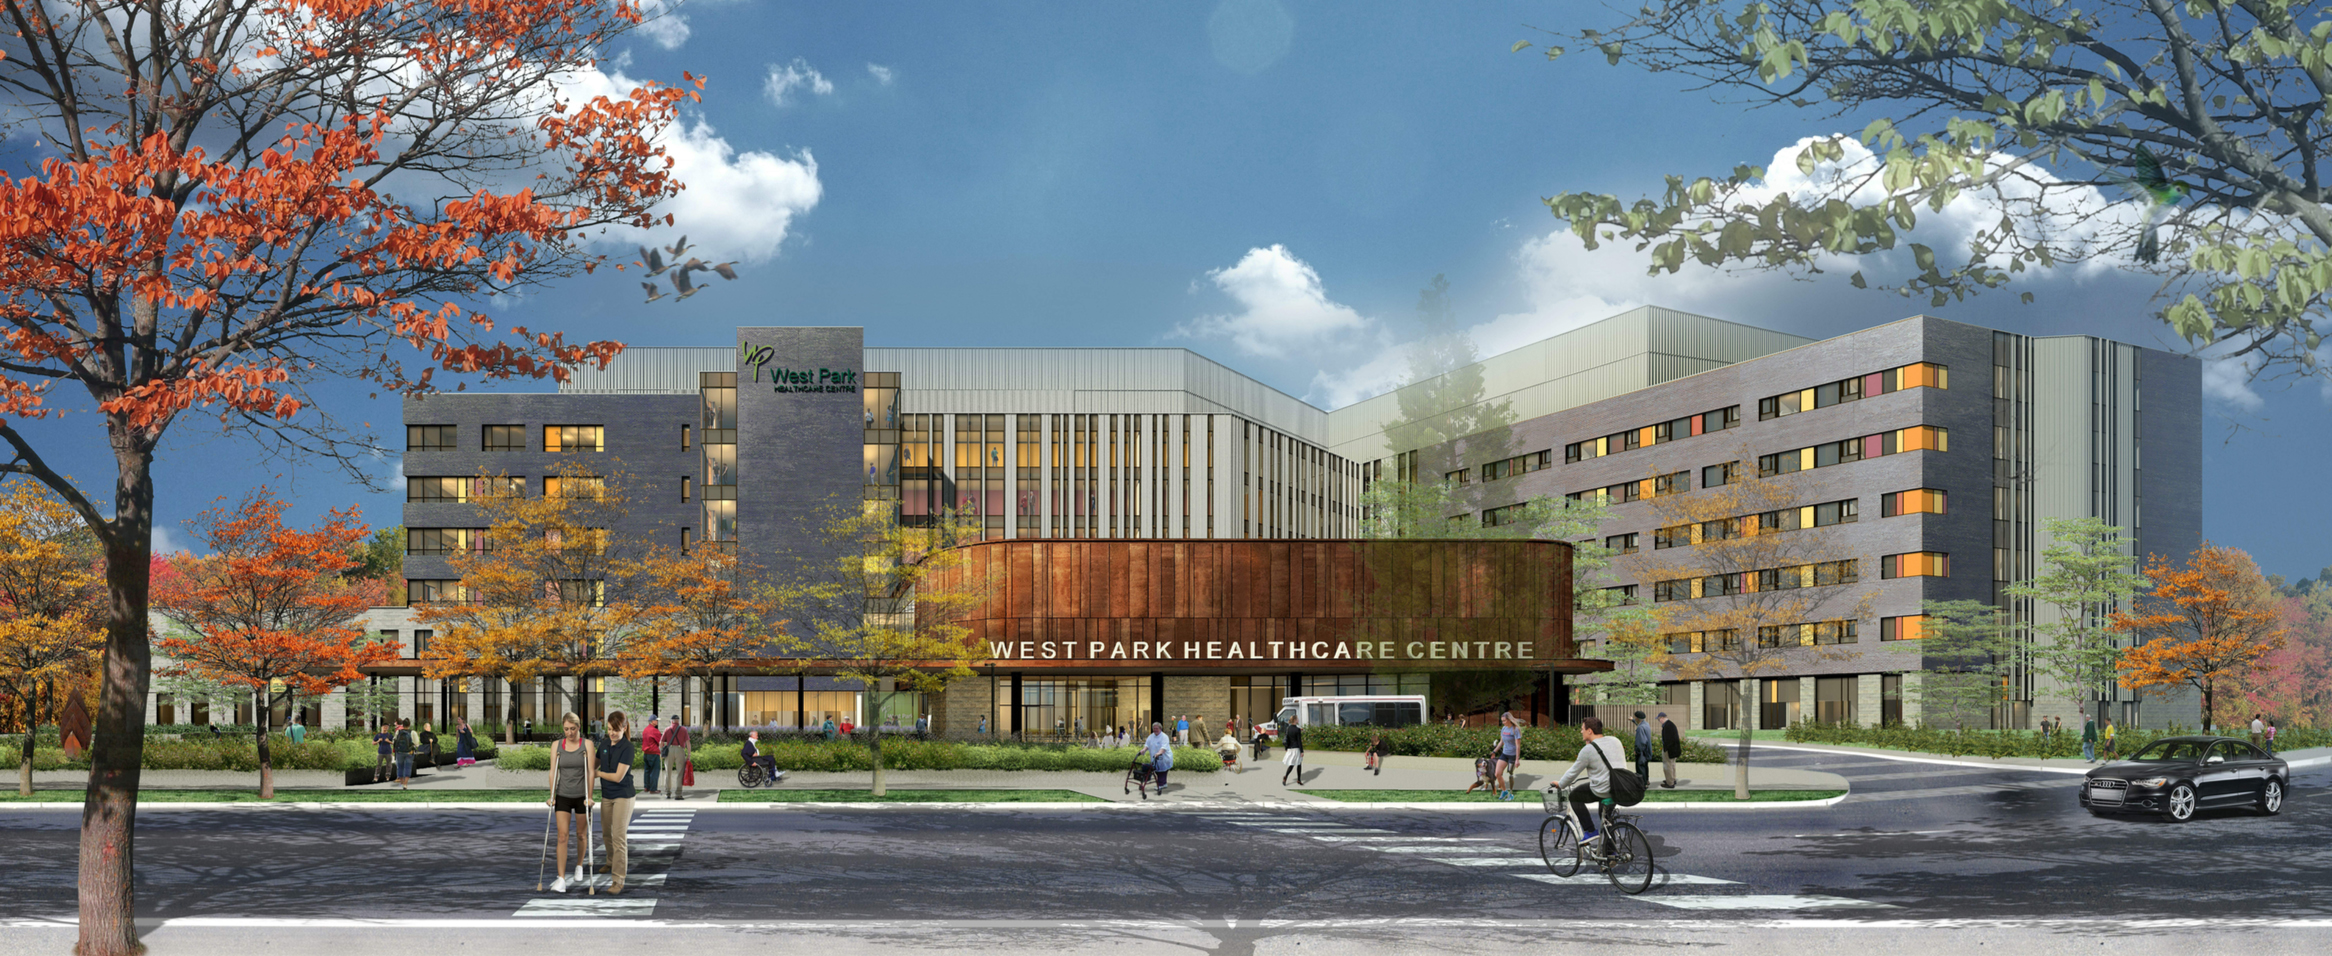 External image of the West Park Healthcare Centre